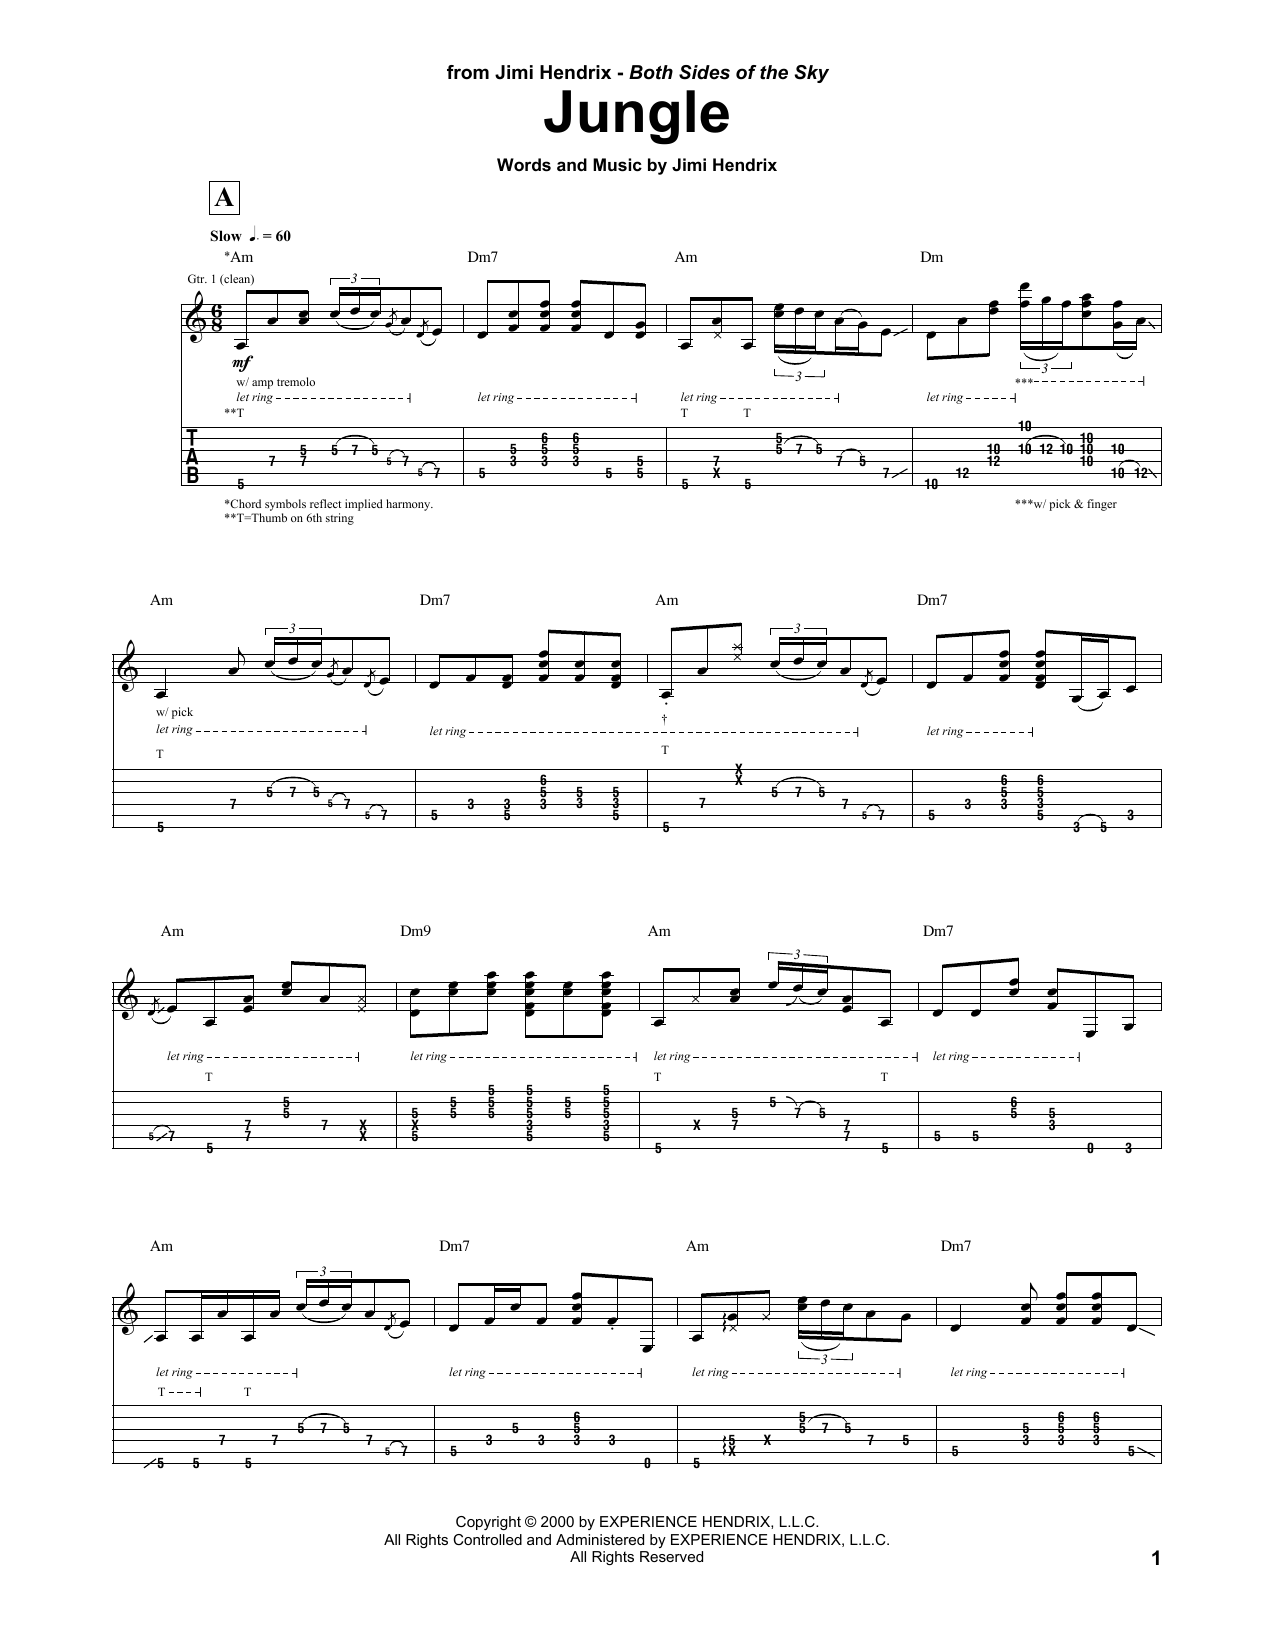 Jimi Hendrix Jungle Sheet Music Notes & Chords for Guitar Tab - Download or Print PDF